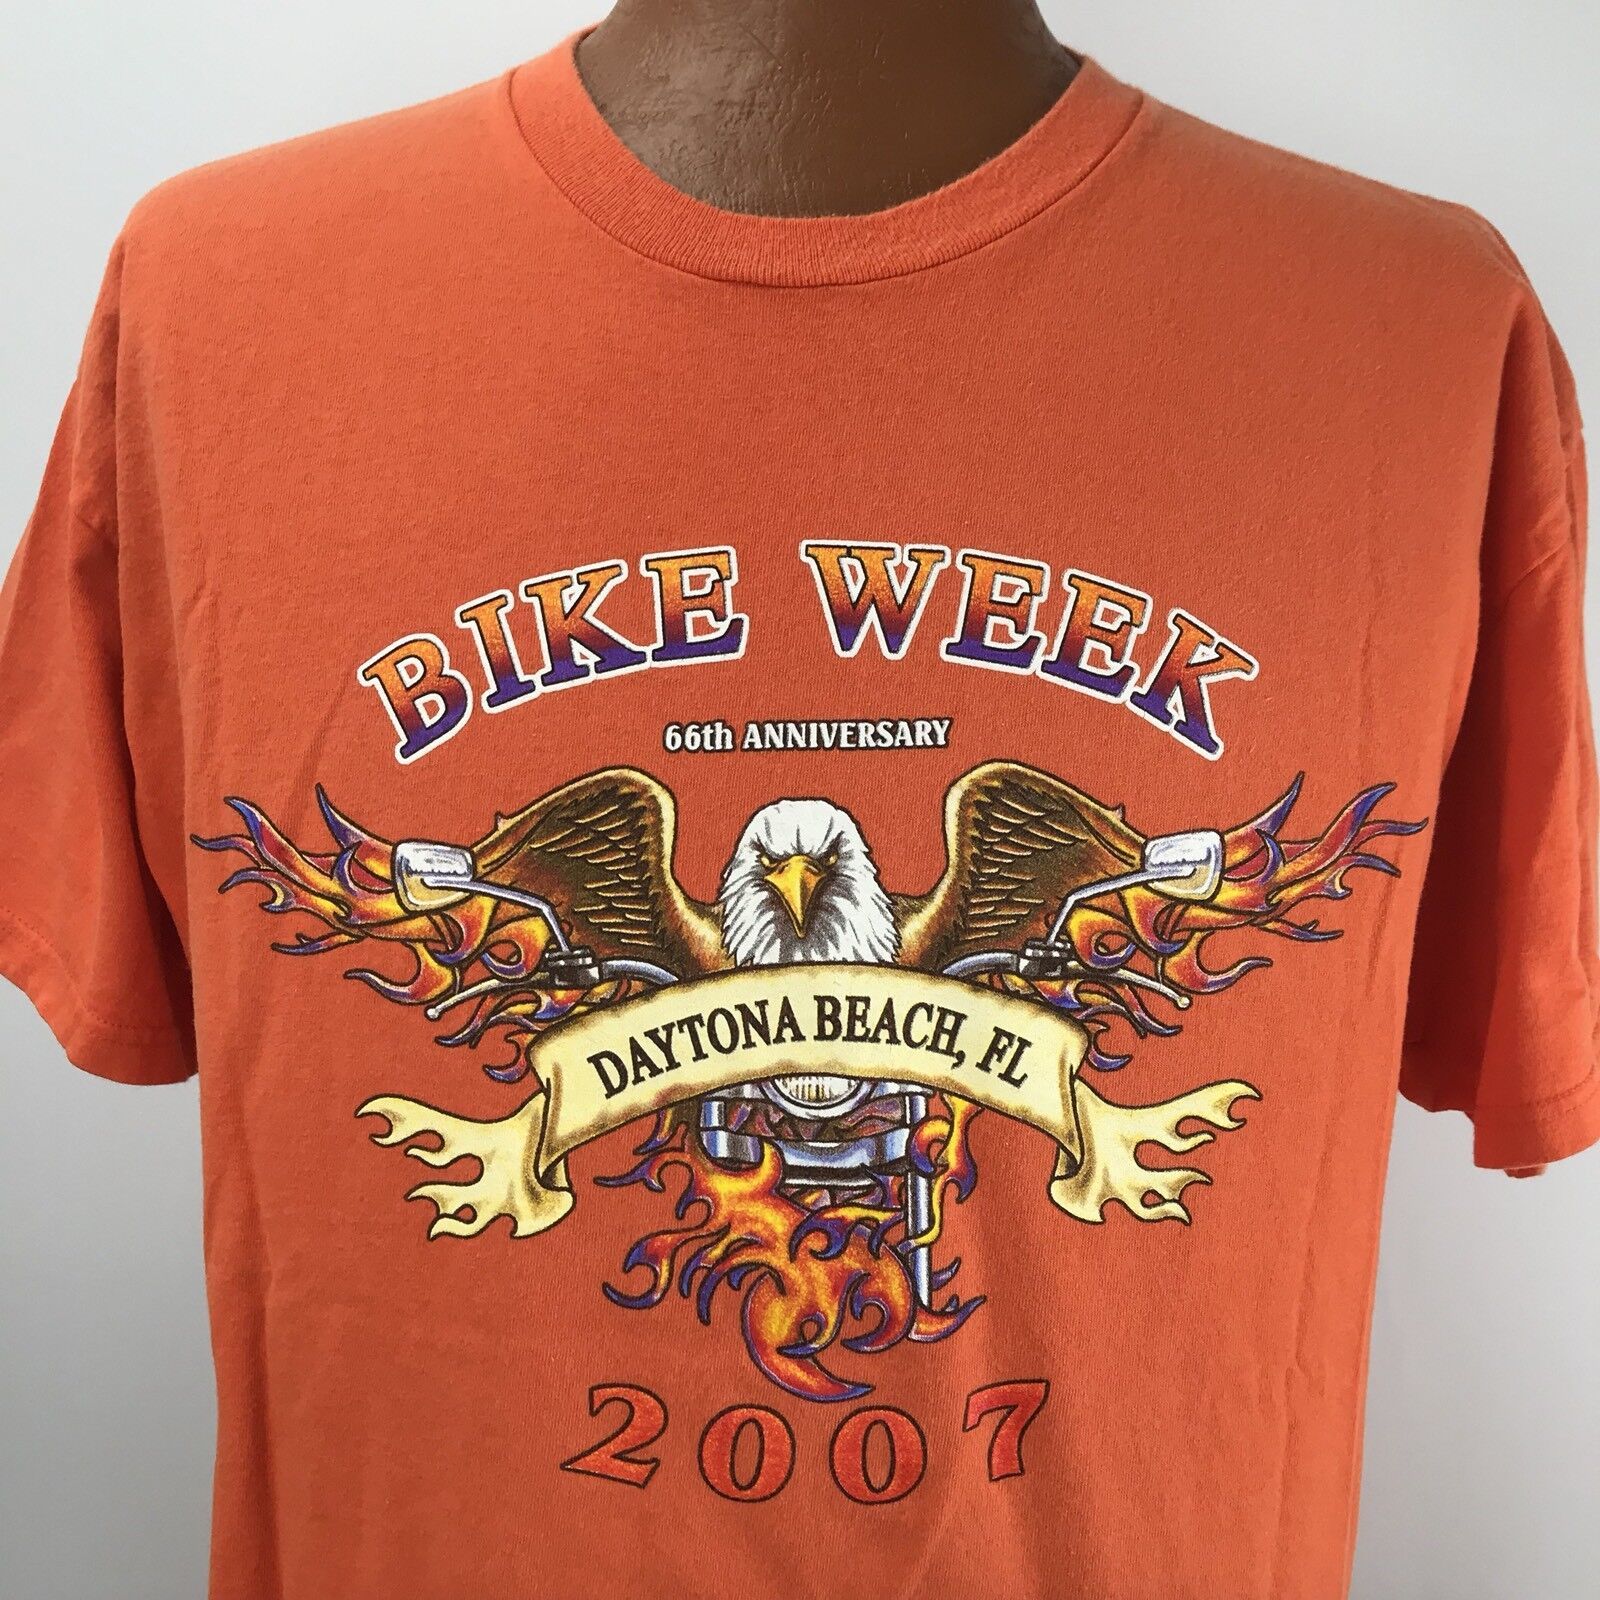 Primary image for Daytona Bike Week 66th Anniversary 2007 Orange Motorcycle XL T Shirt